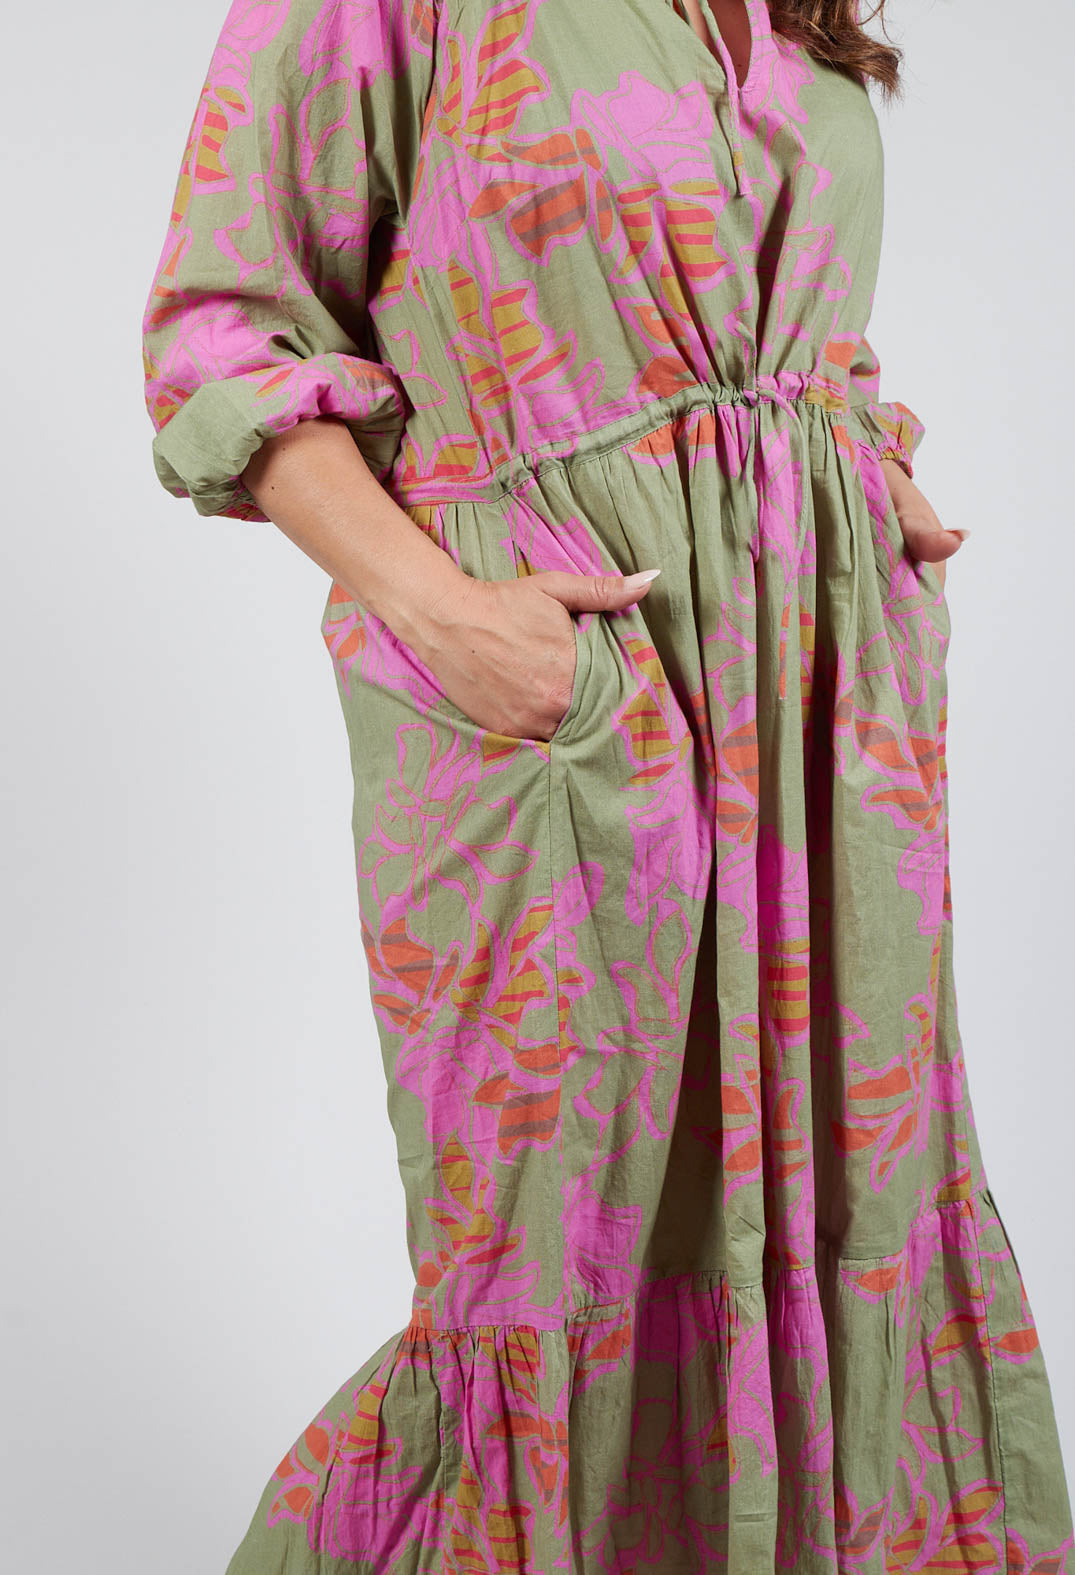 Long Sleeve Mamasita Dress with Pink Floral Print